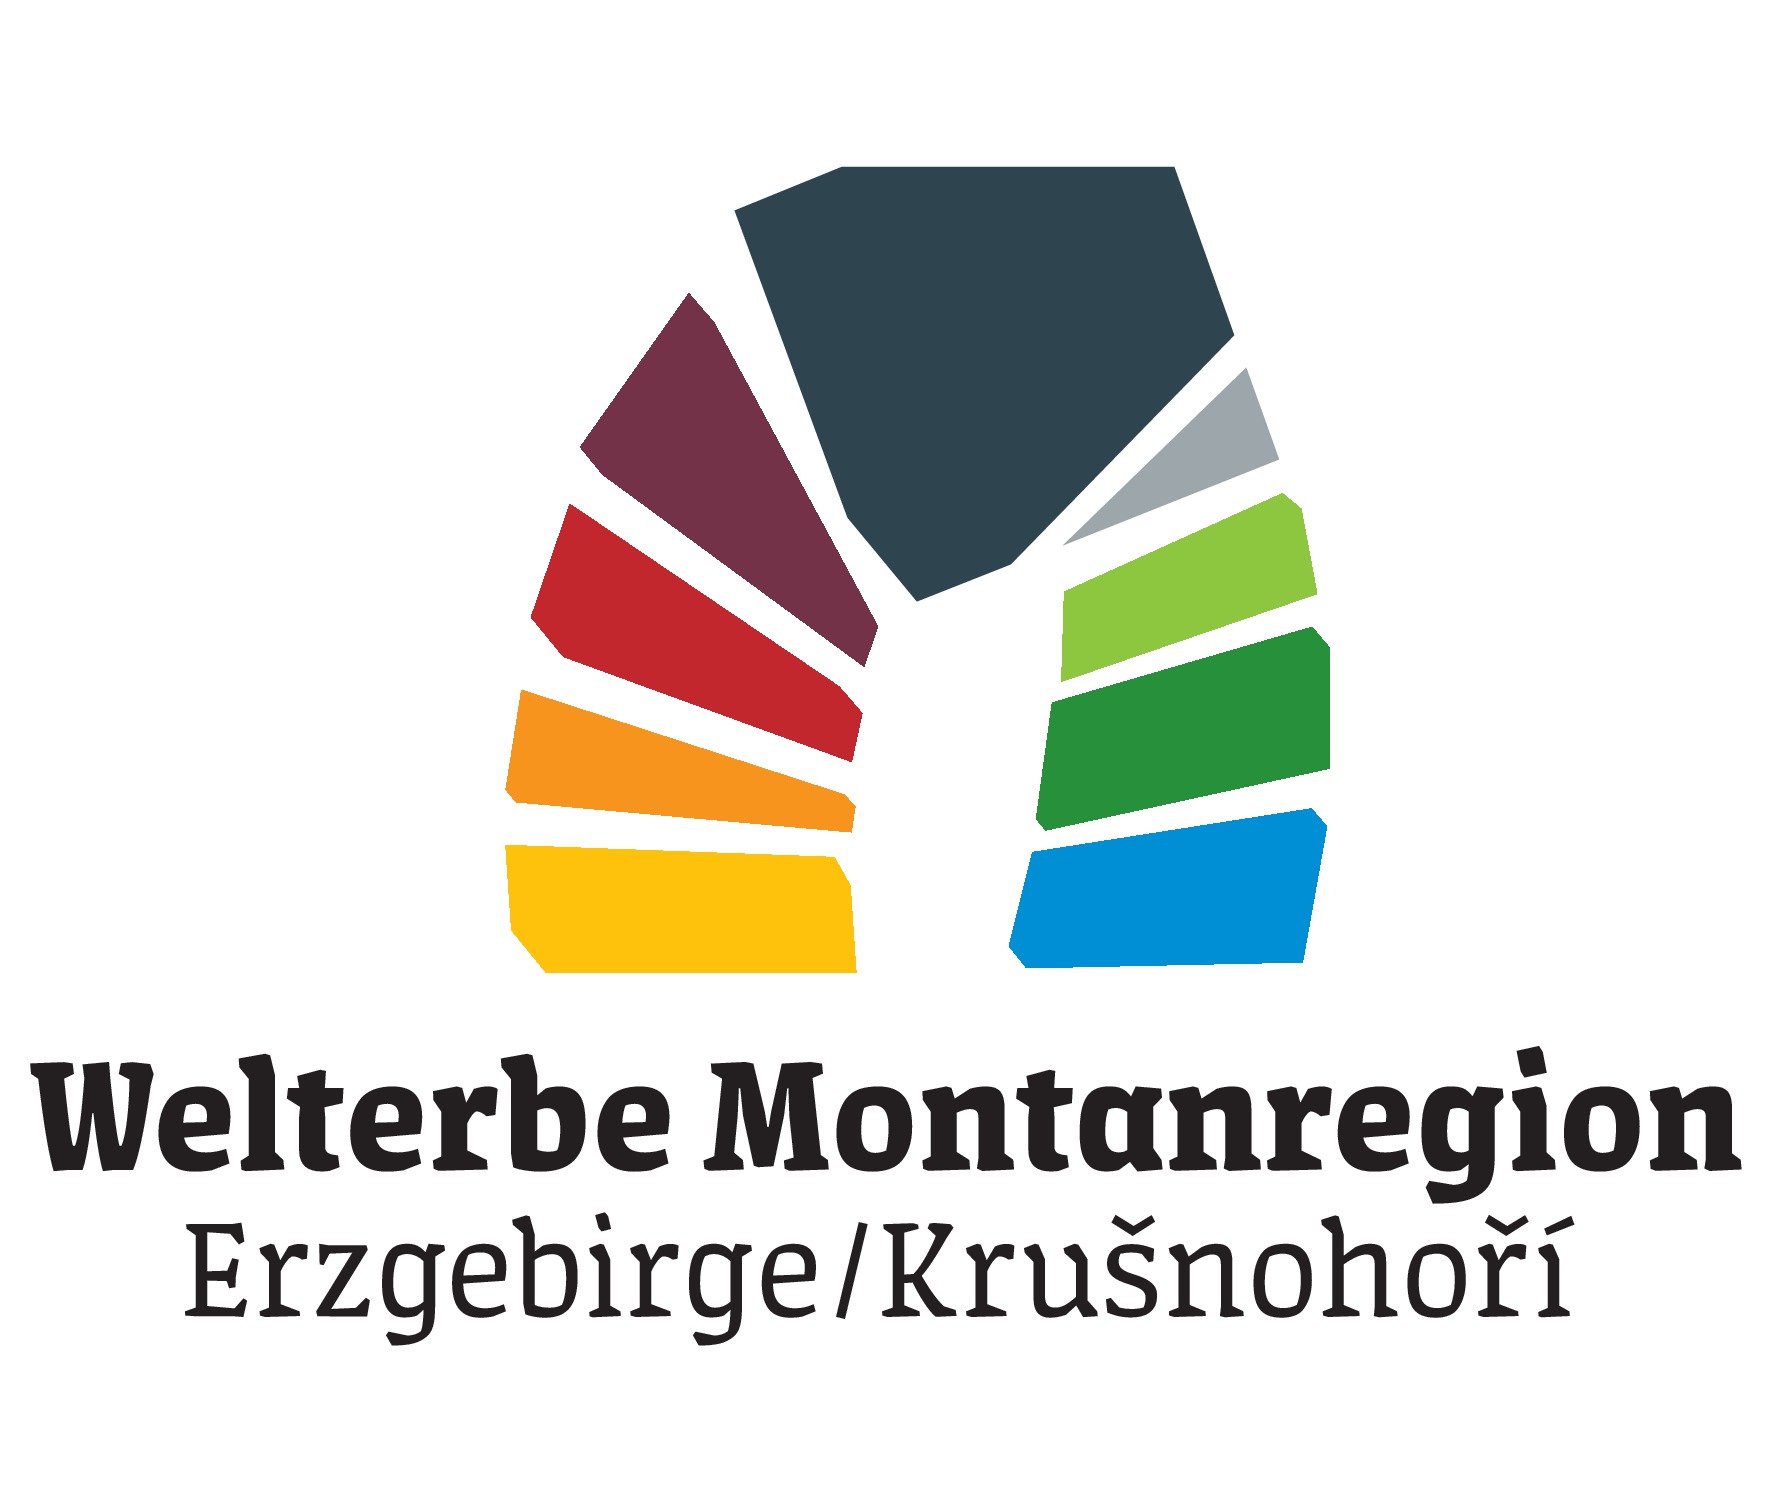 Welterbe Montanregion Erzgebirge e.V.